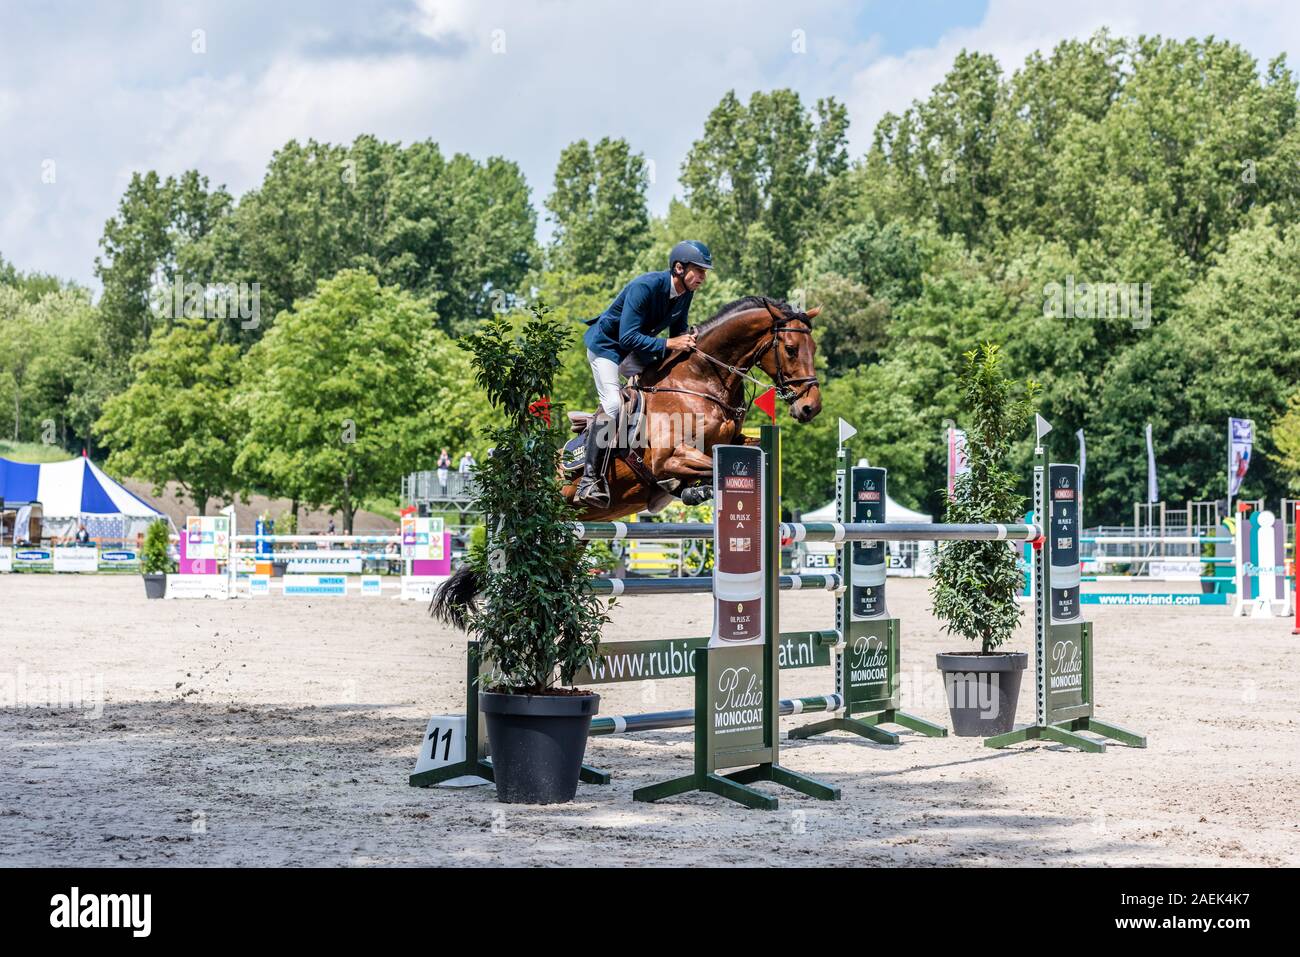 Haarlemmermeer Holland June 19 2019 concours hippique horseback jumping Stock Photo